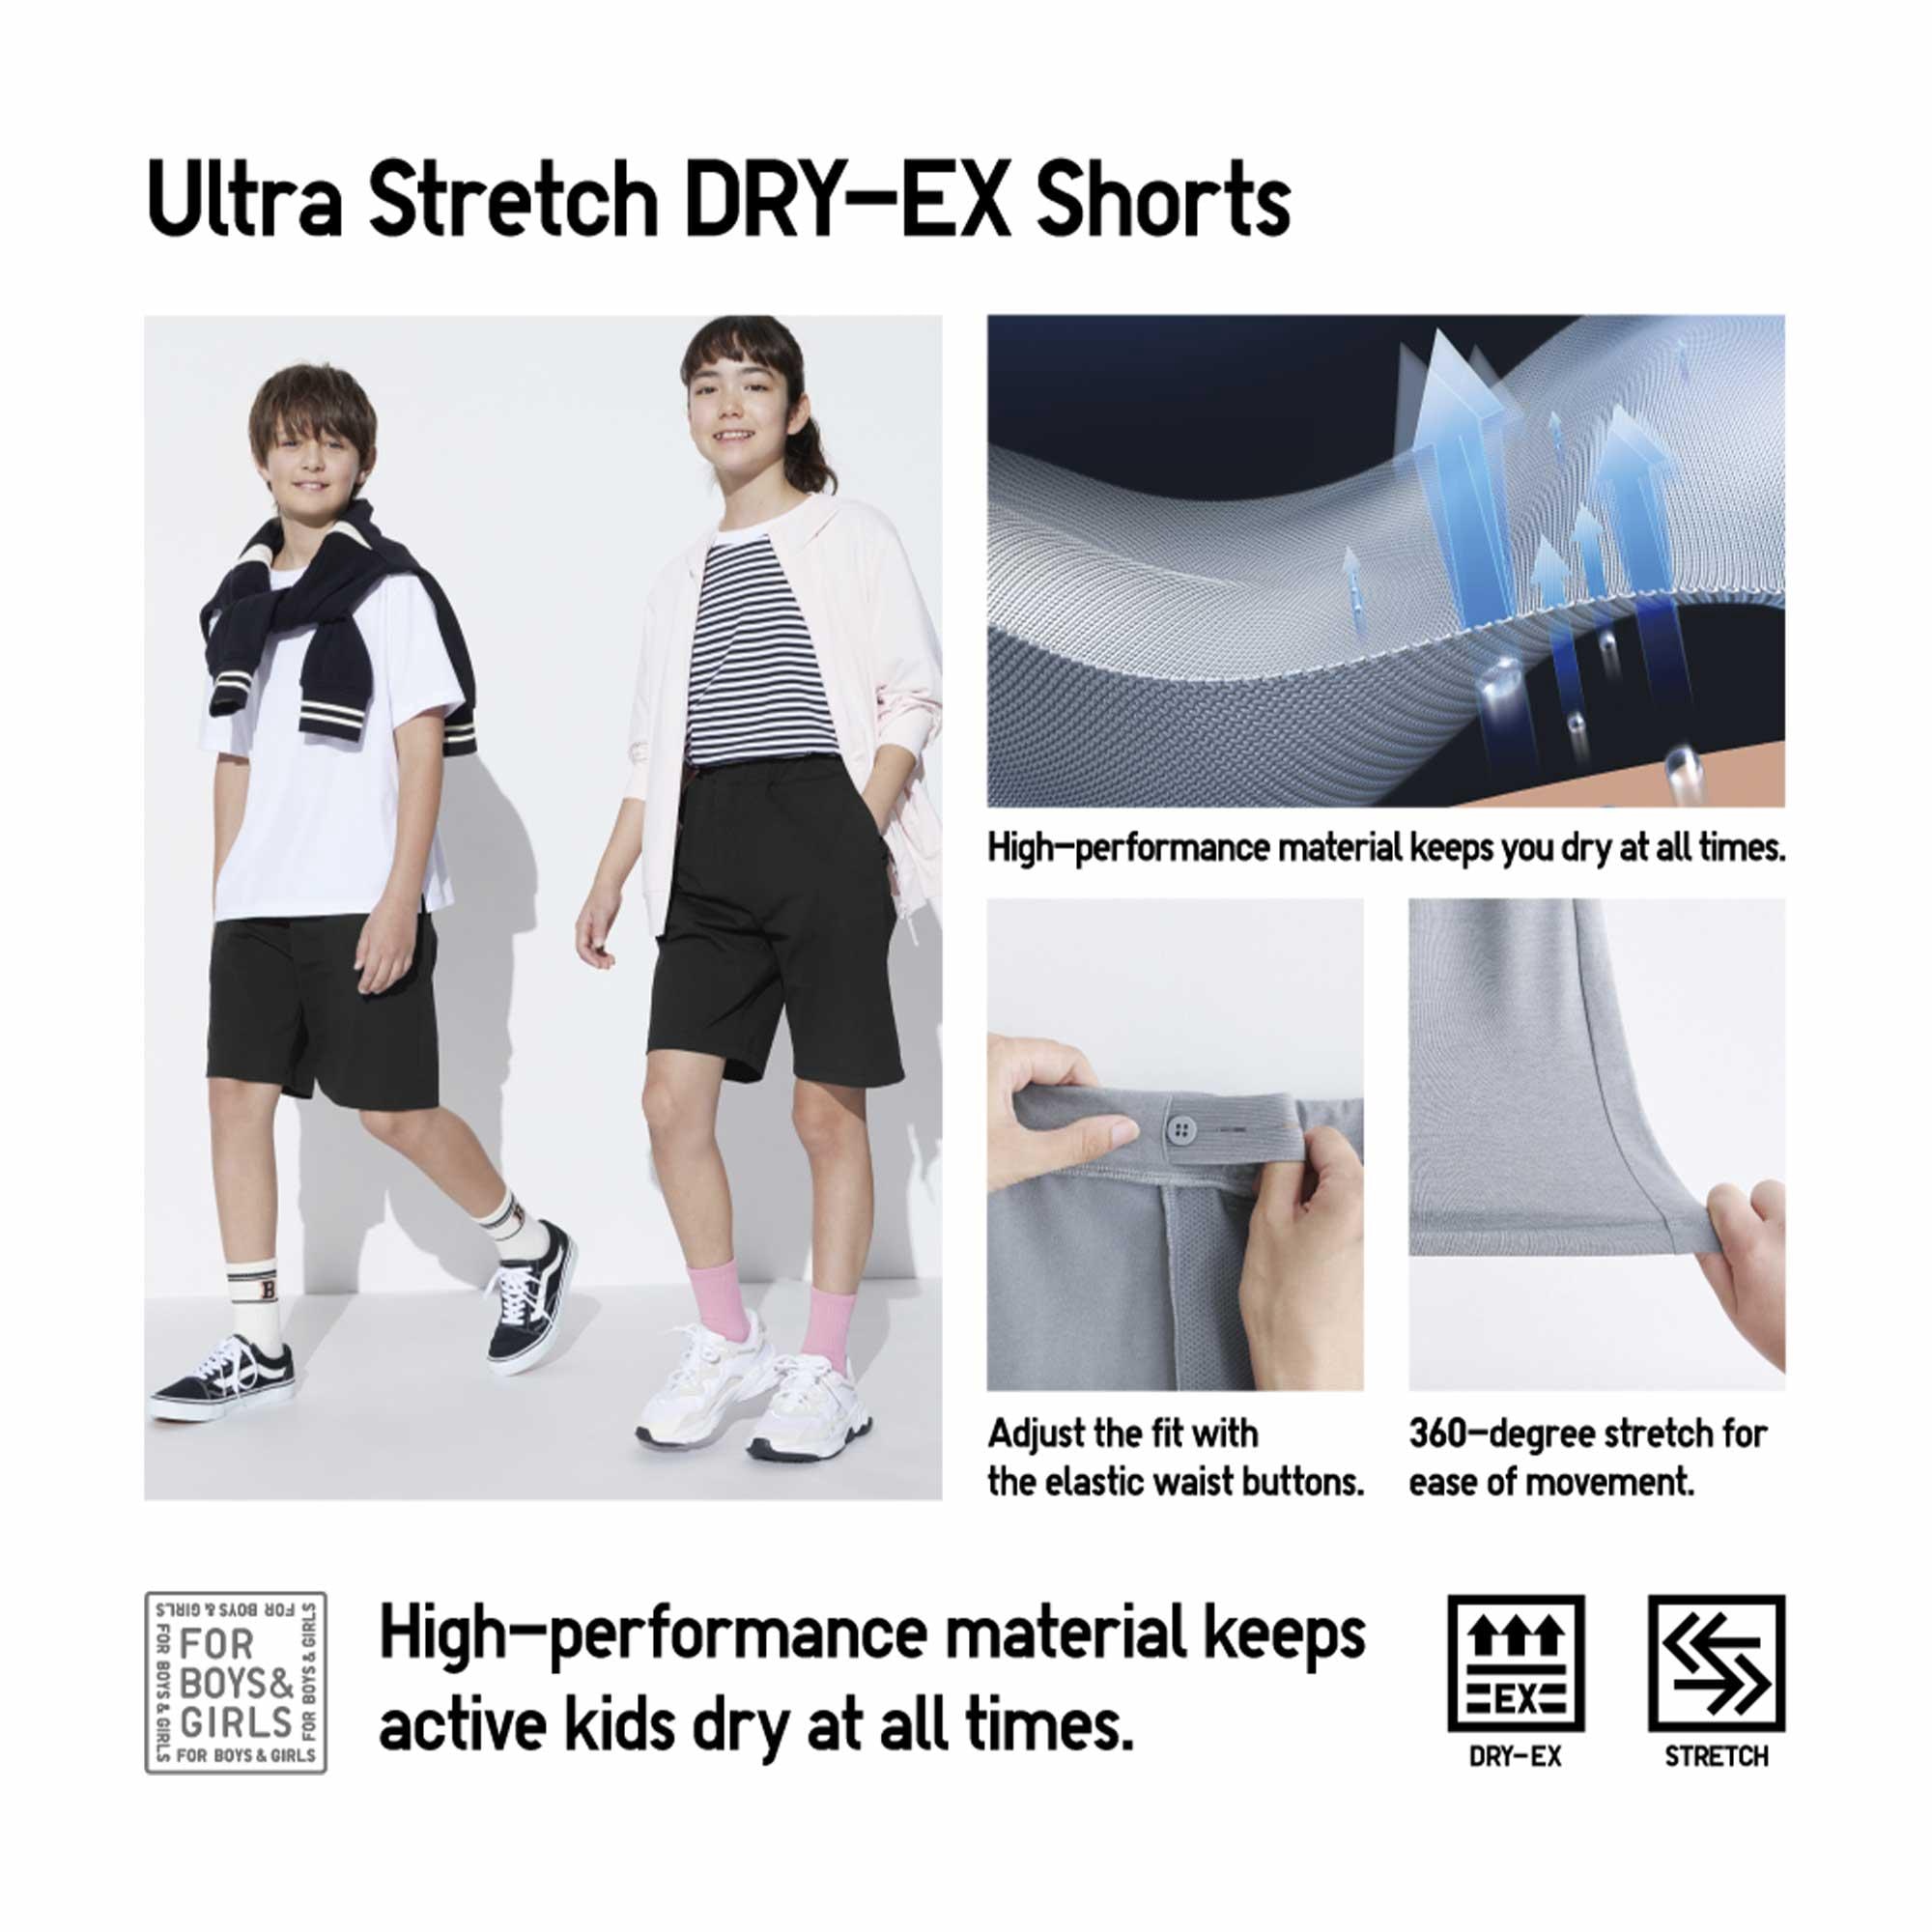 EXTRA STRETCH DRY-EX SHORTS